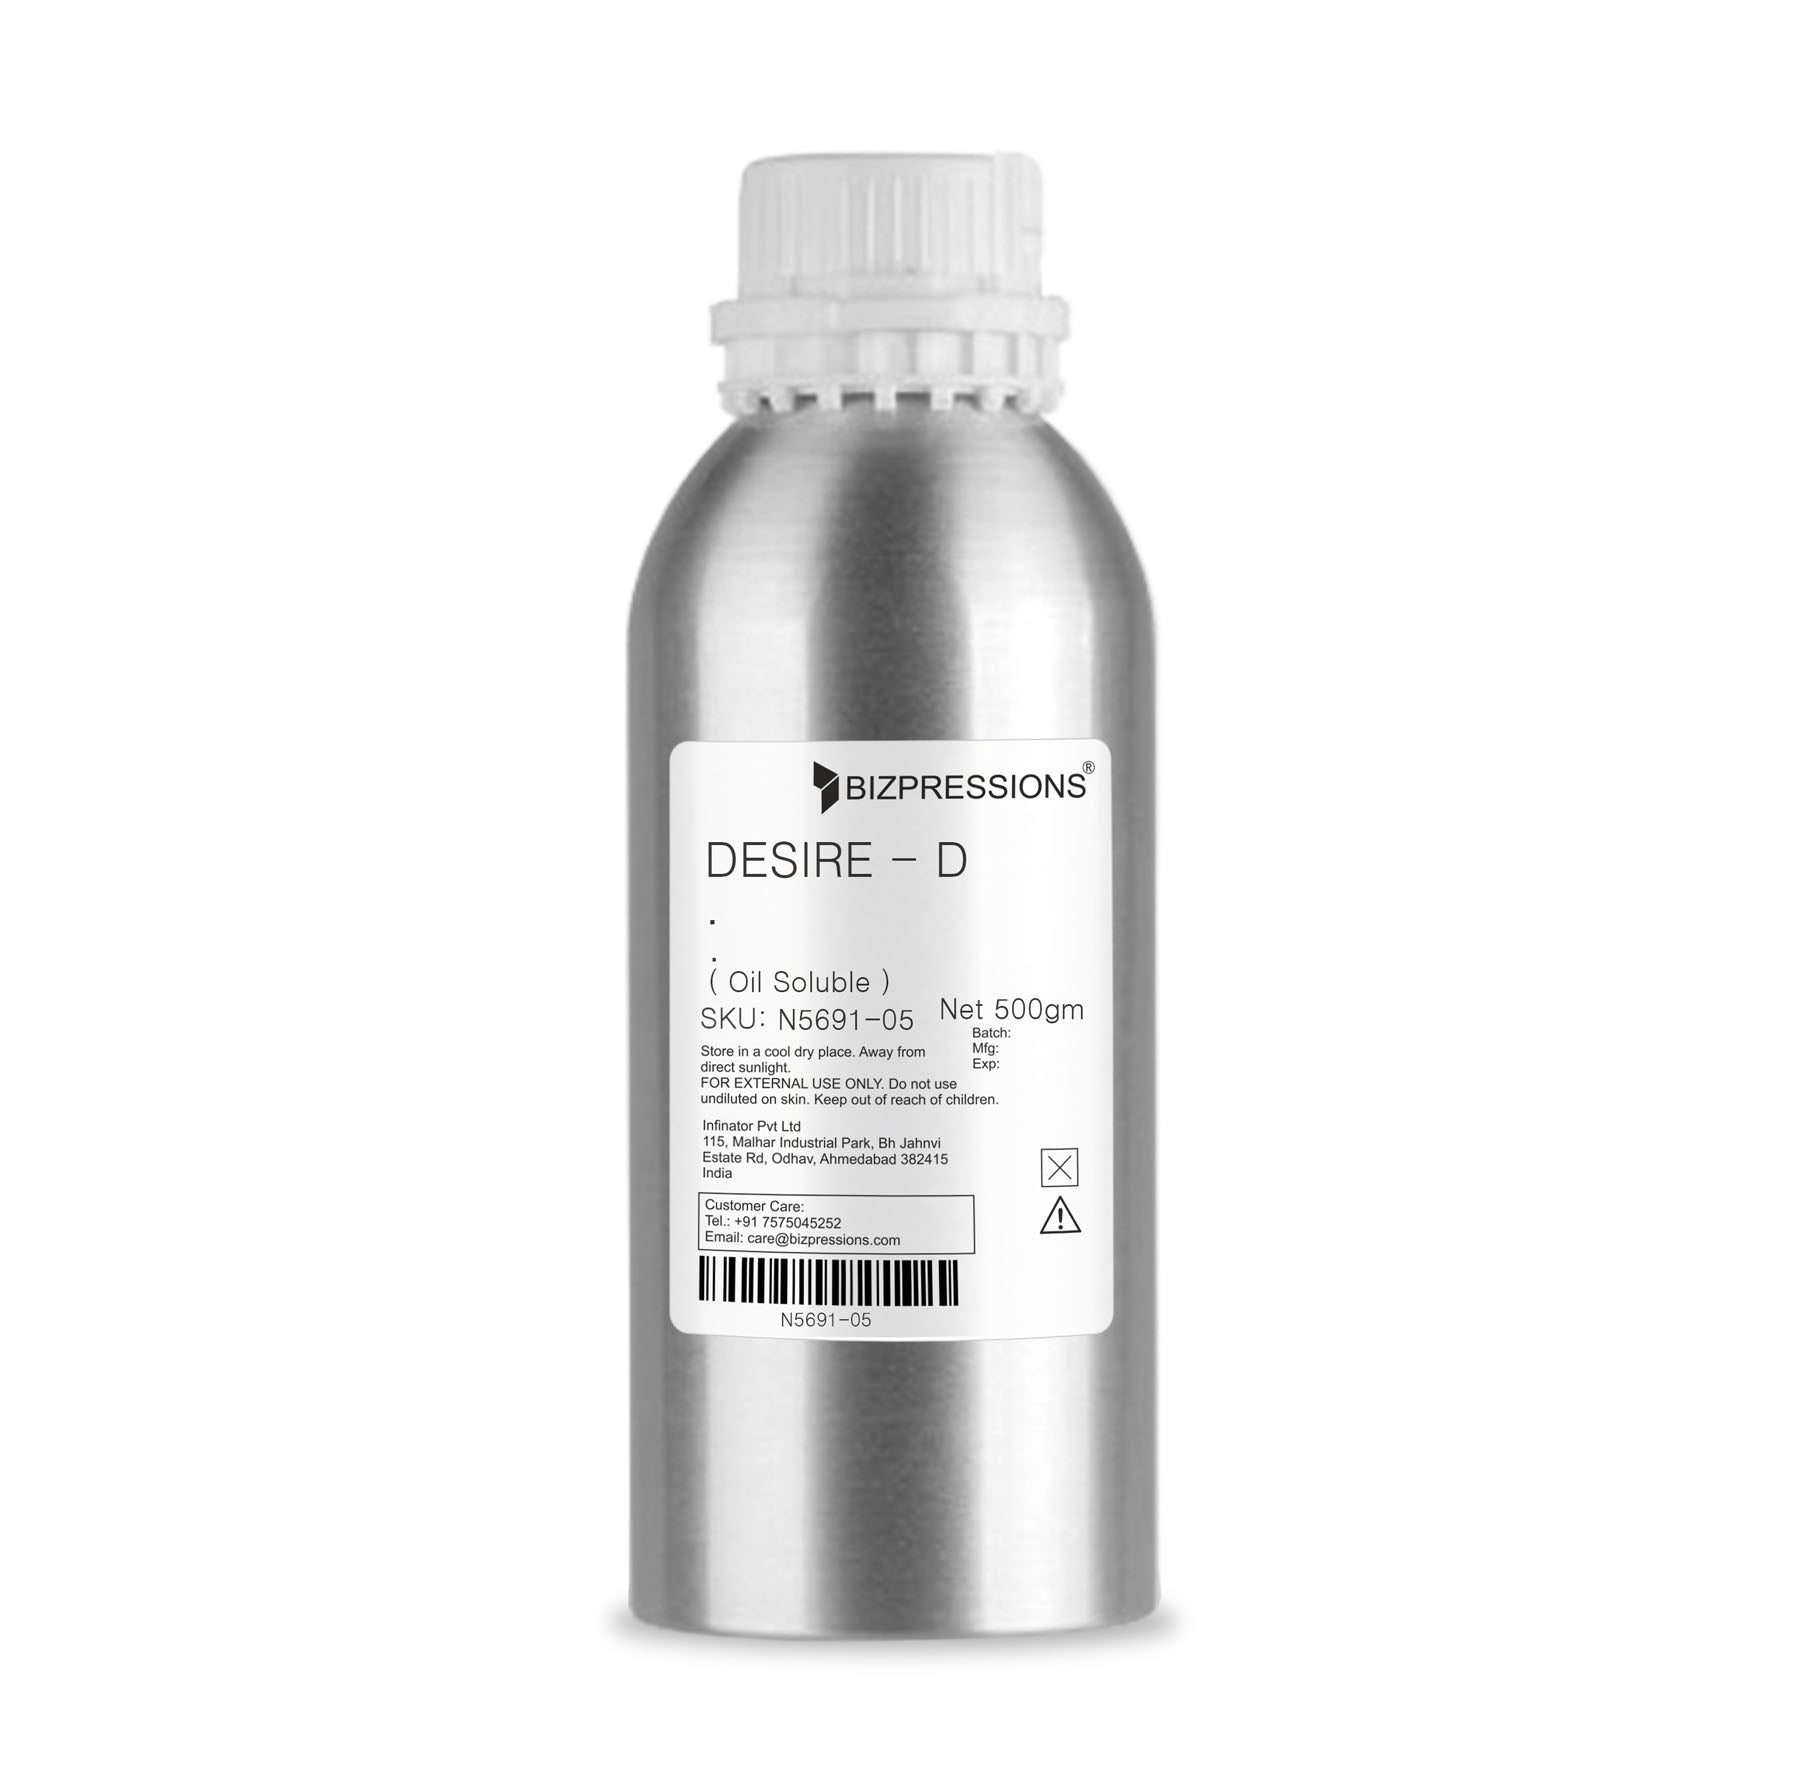 DESIRE - D - Fragrance ( Oil Soluble ) - 500 gm